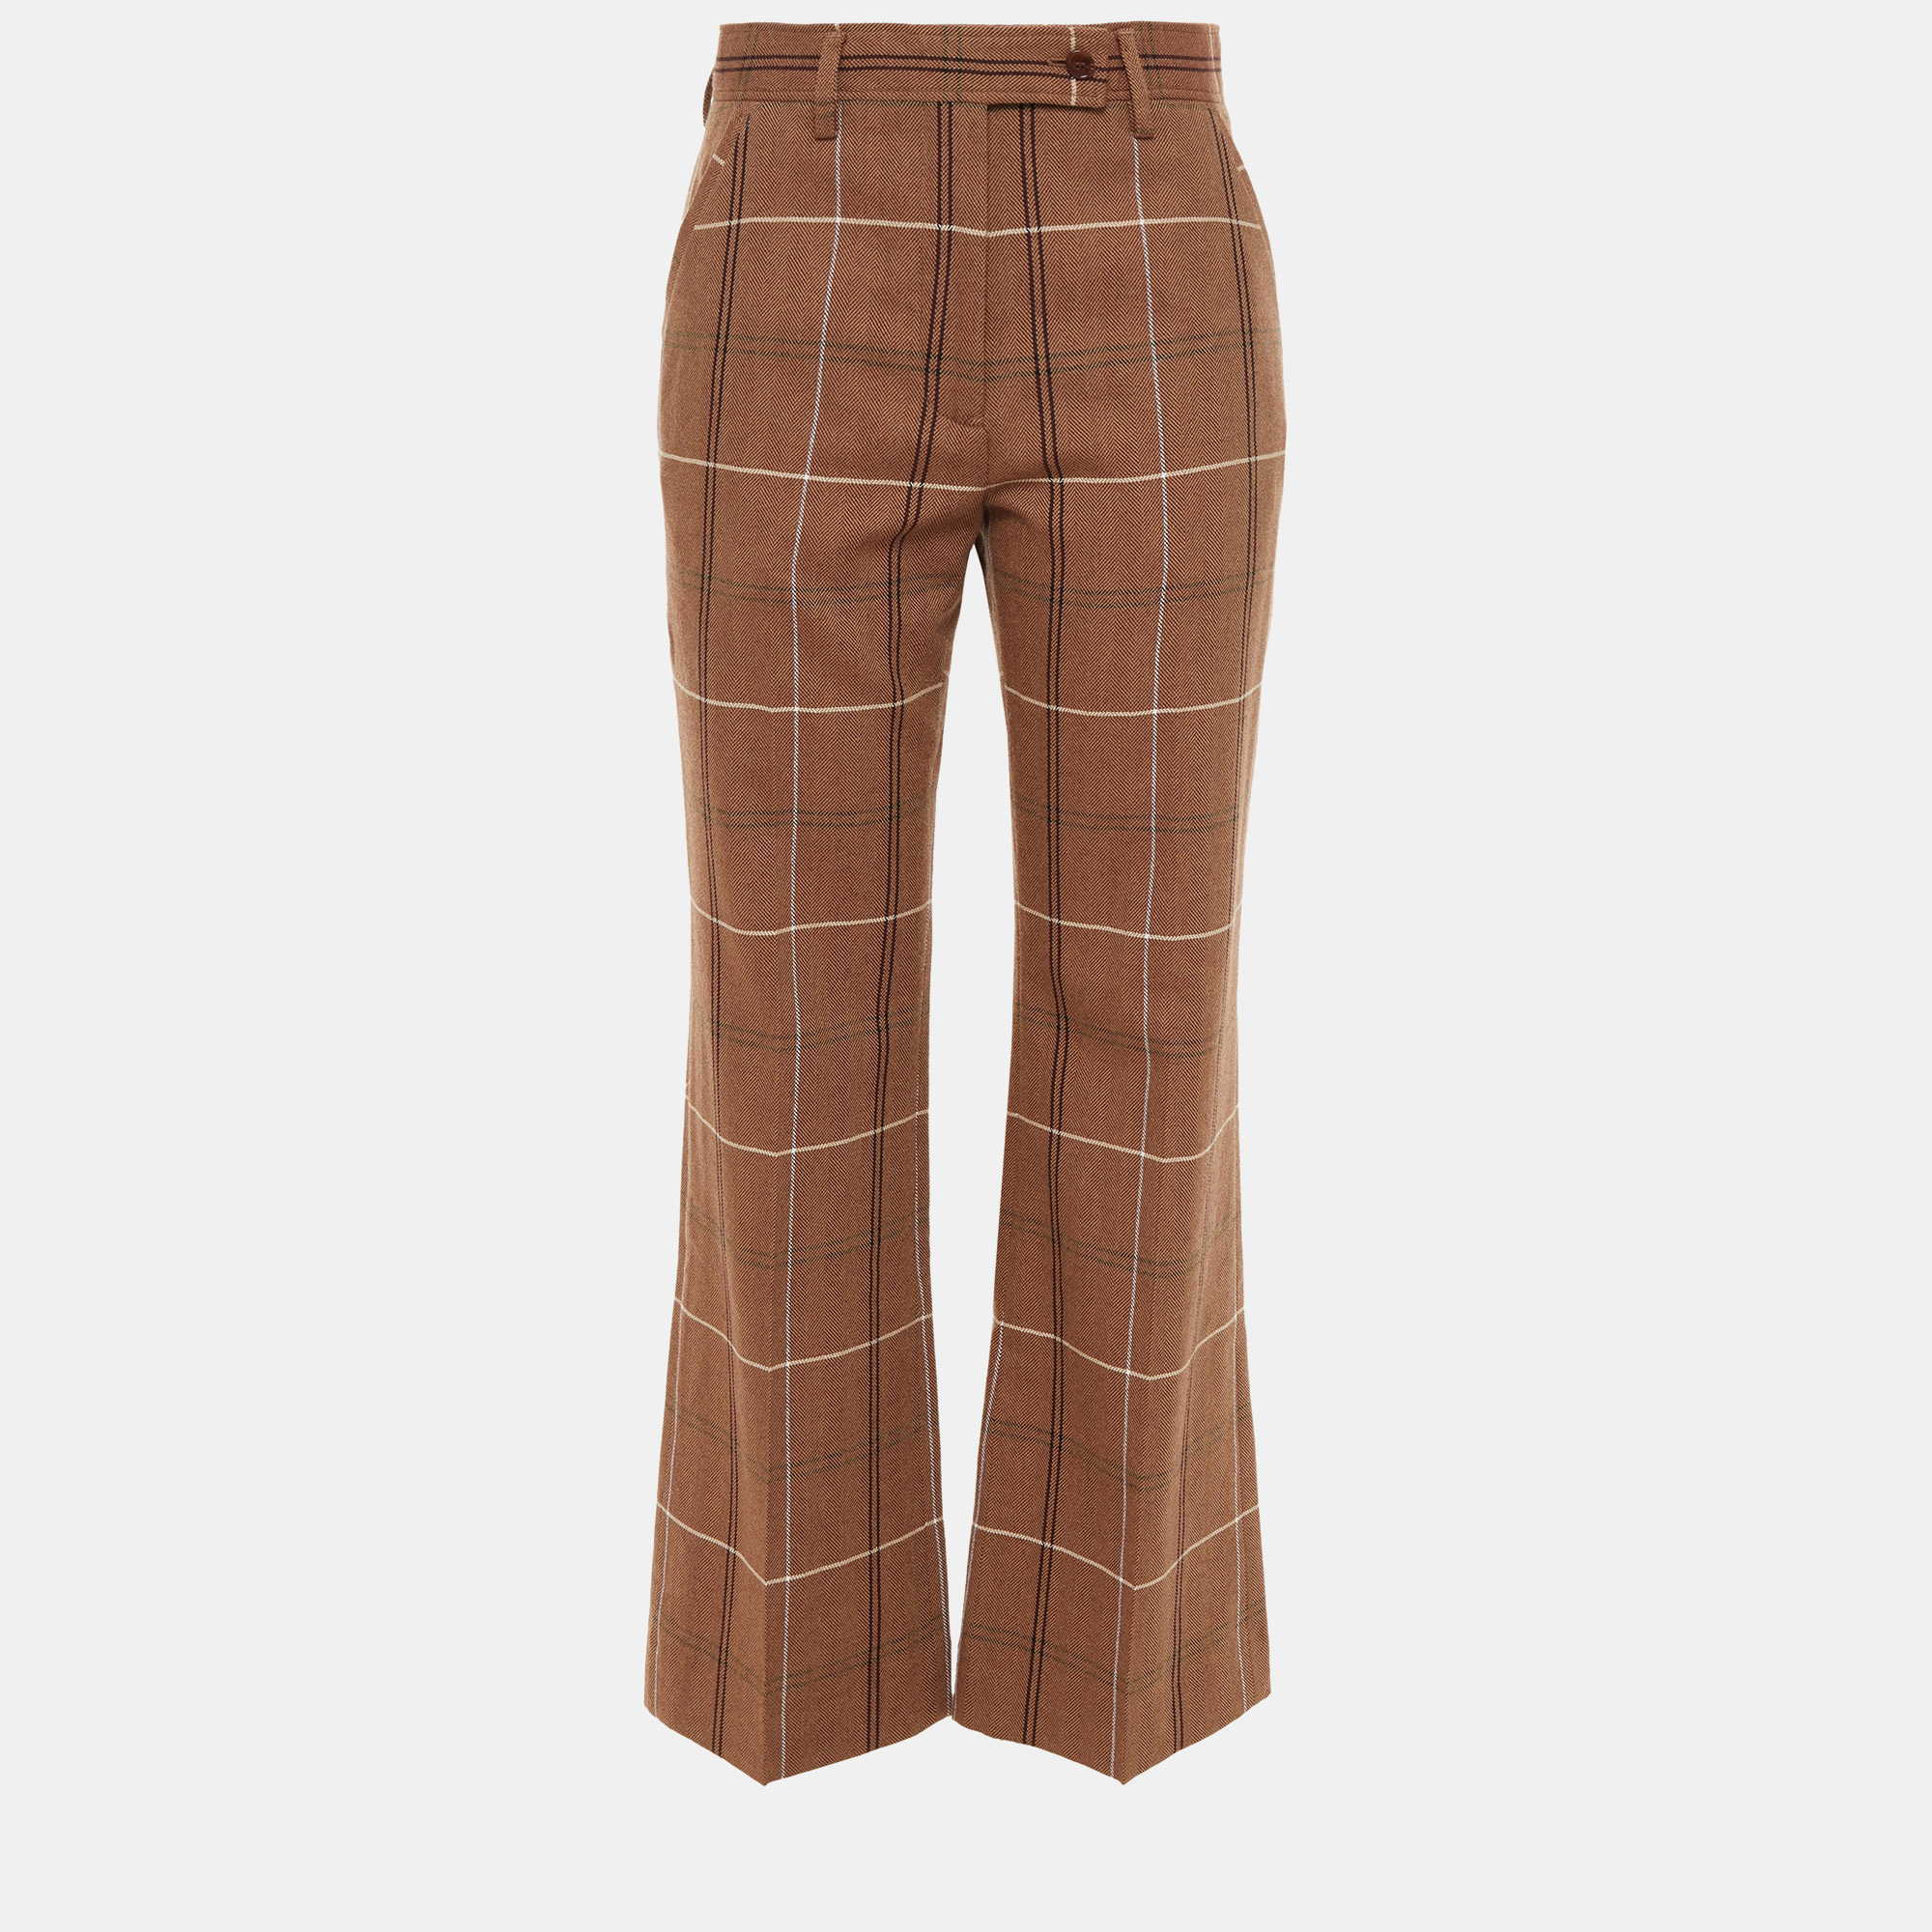 Acne studios brown checked wool straight leg pants s (eu 36)